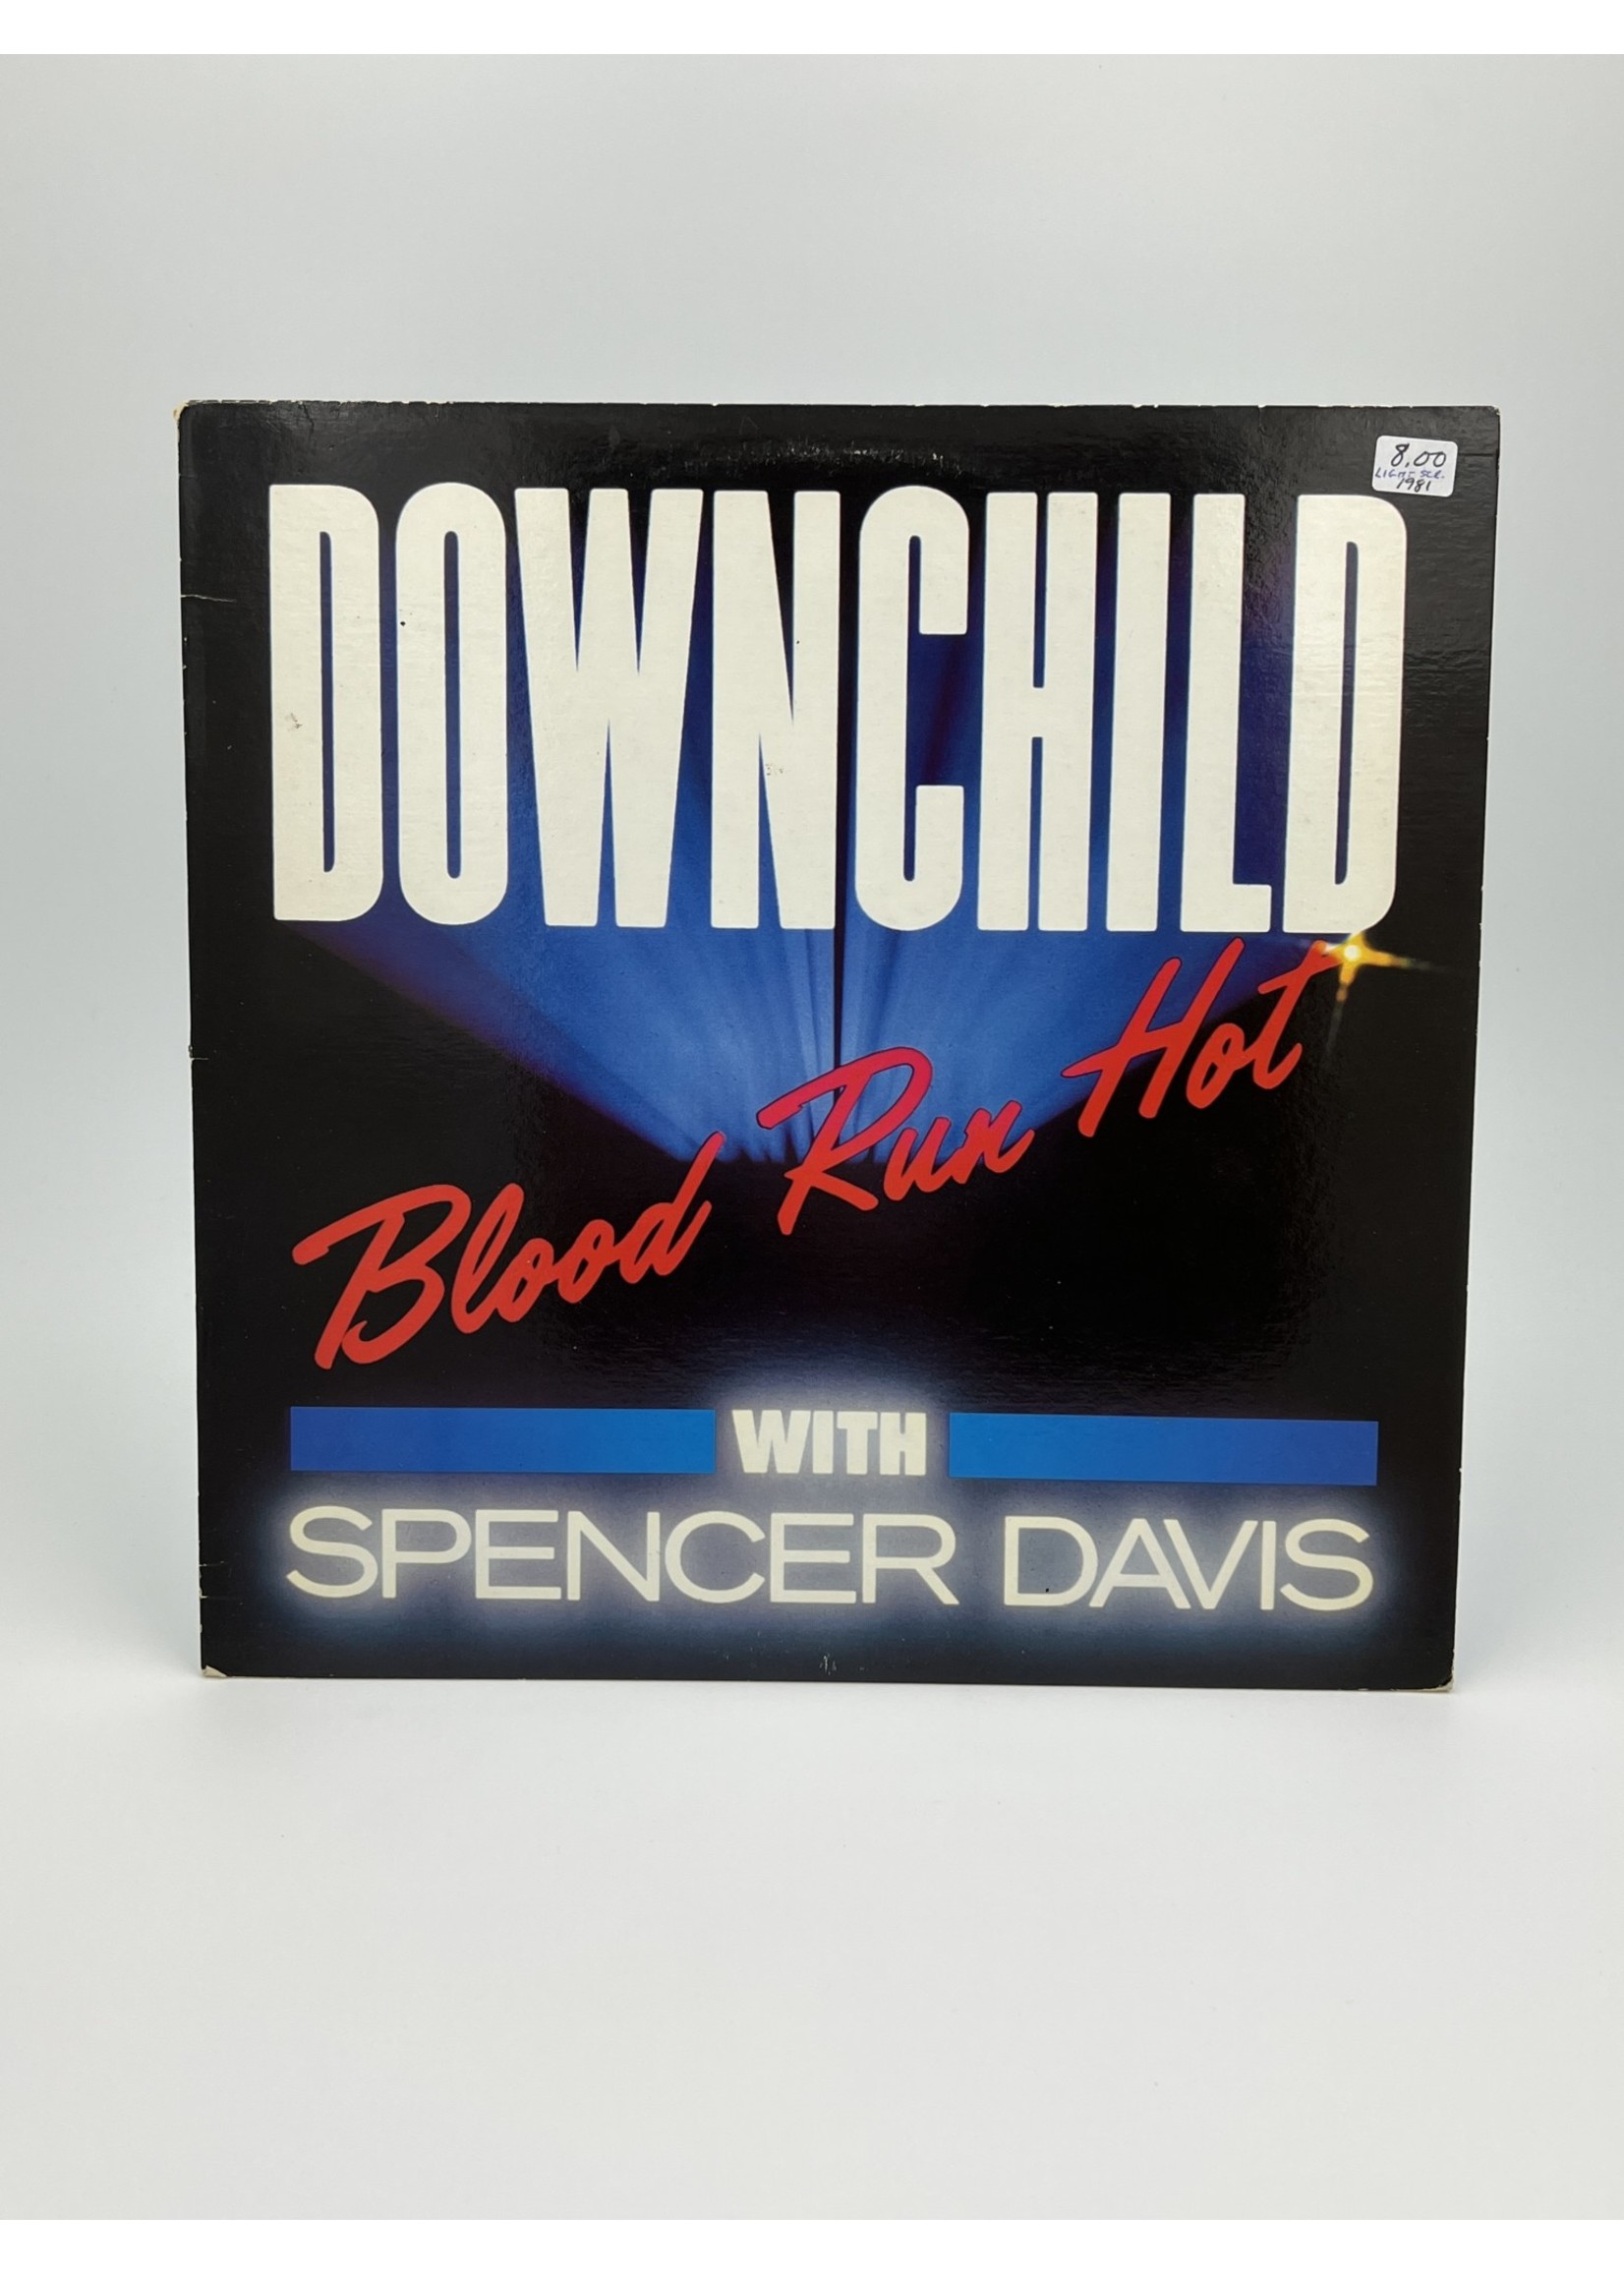 LP Downchild Blood Run Hot with Spencer Davis LP Record